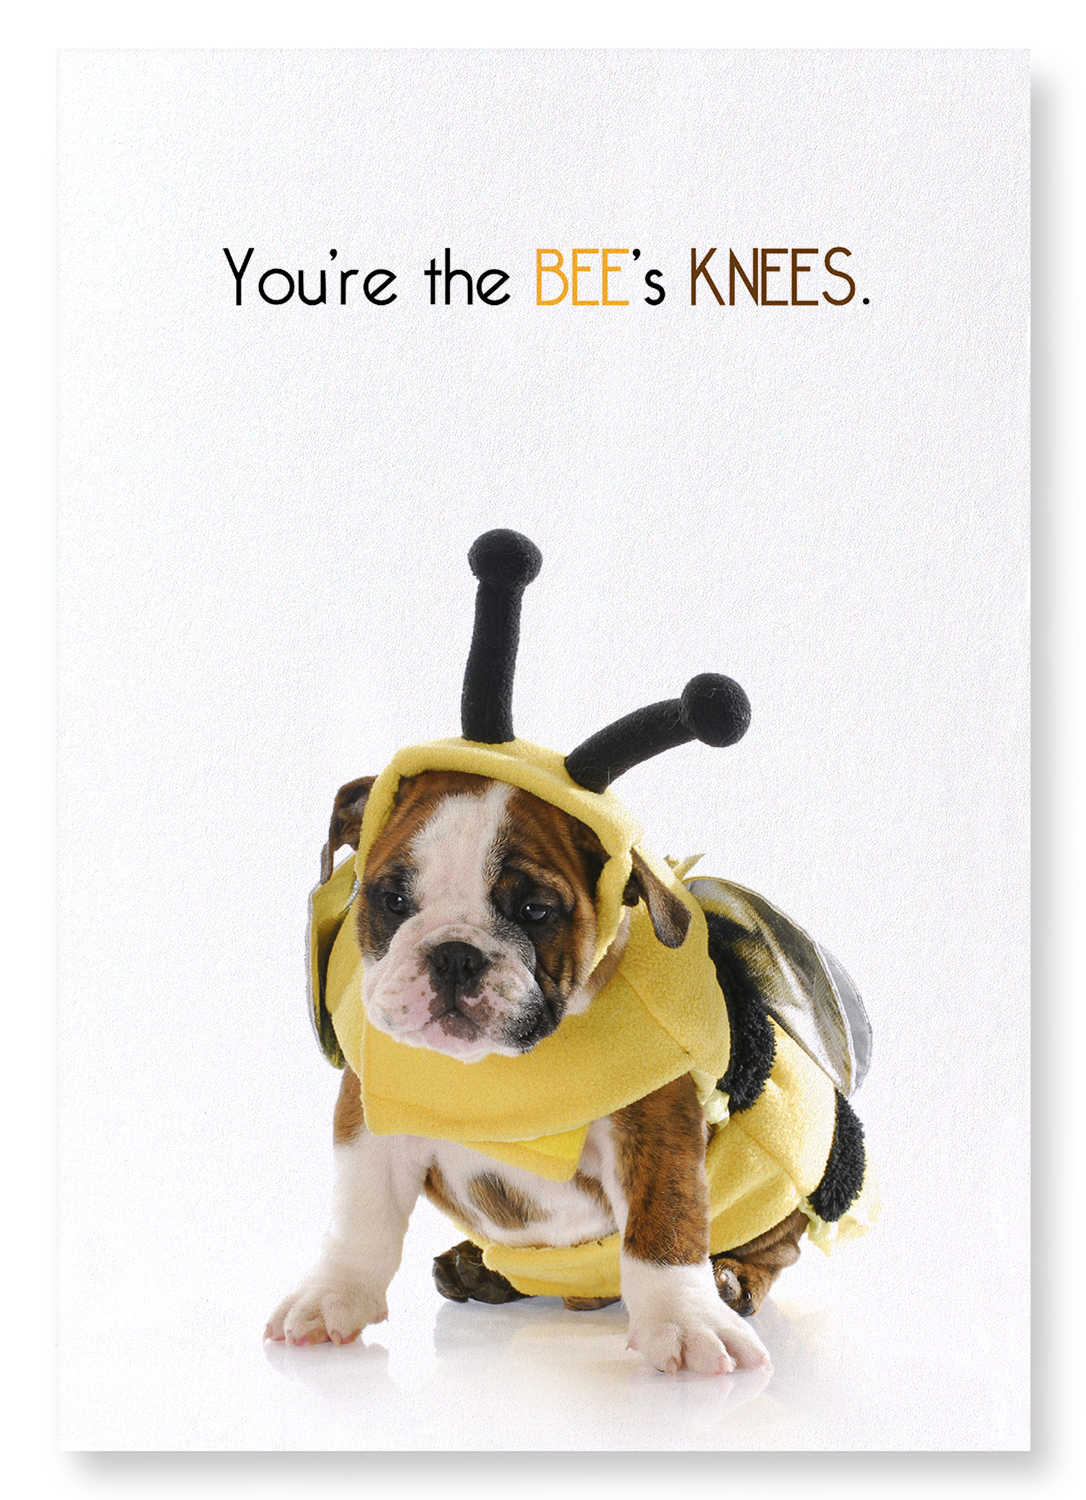 THE BEE'S KNEES: Funny Animal Art print